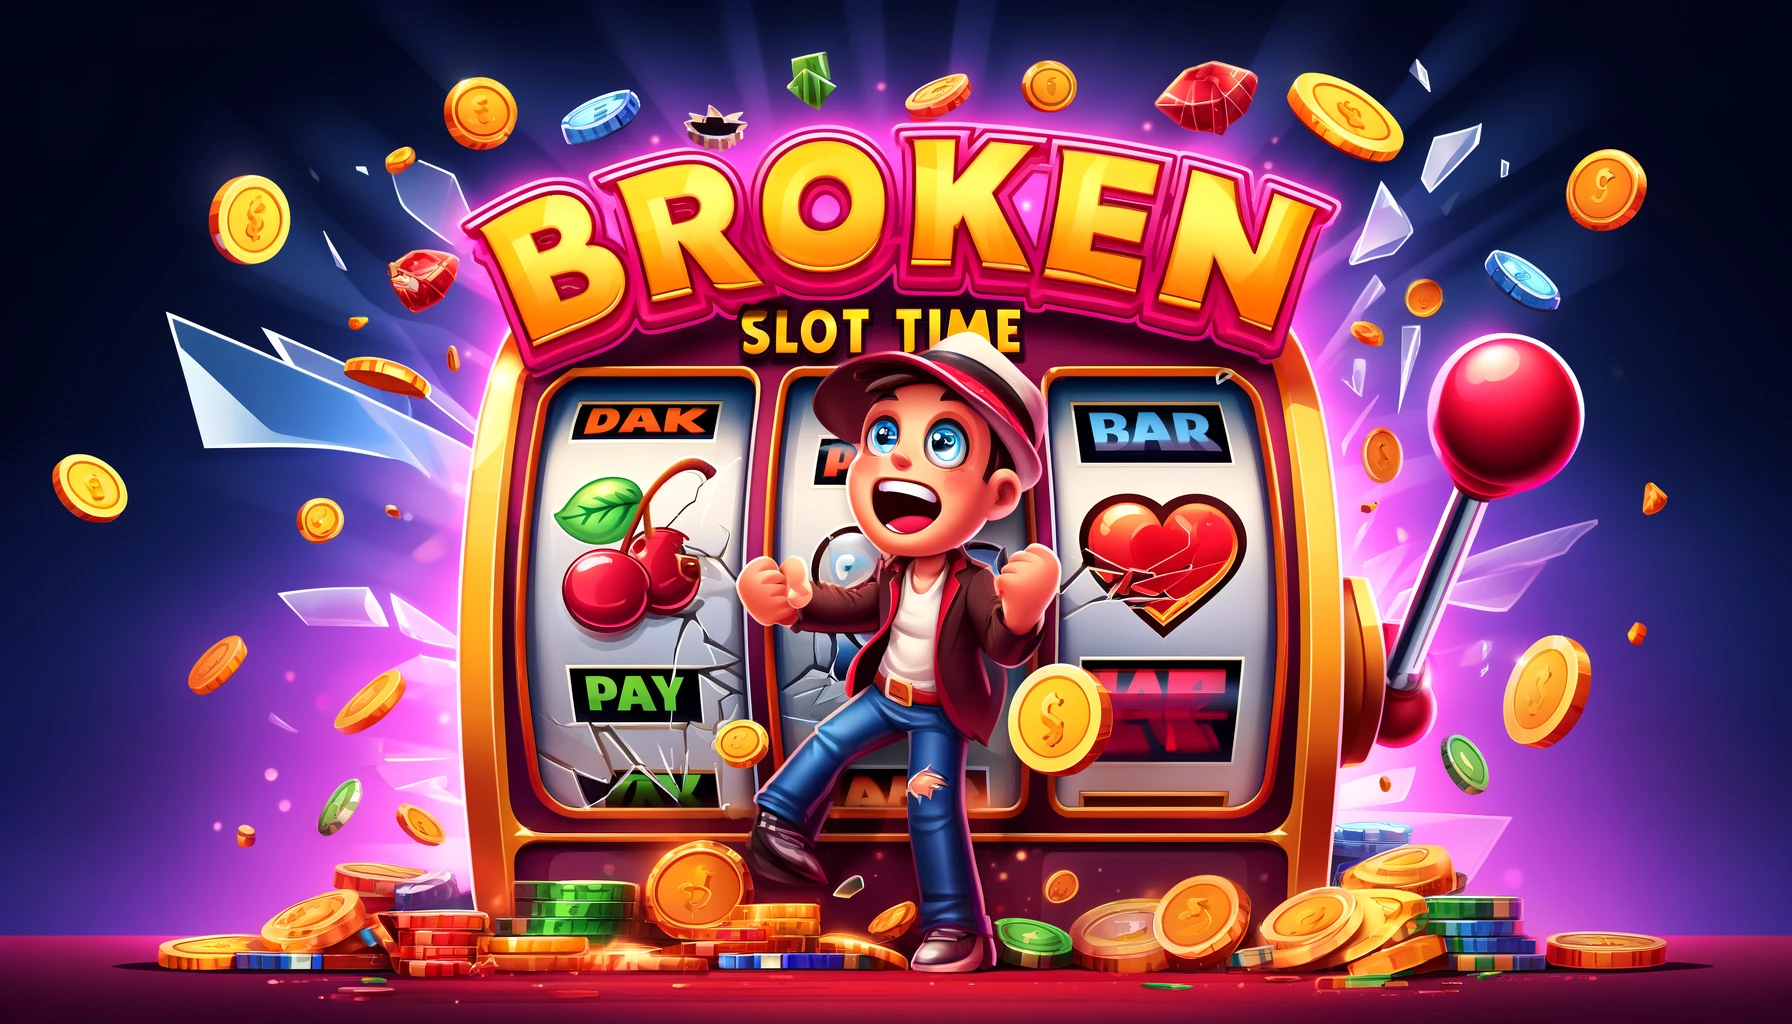 Broken slot time